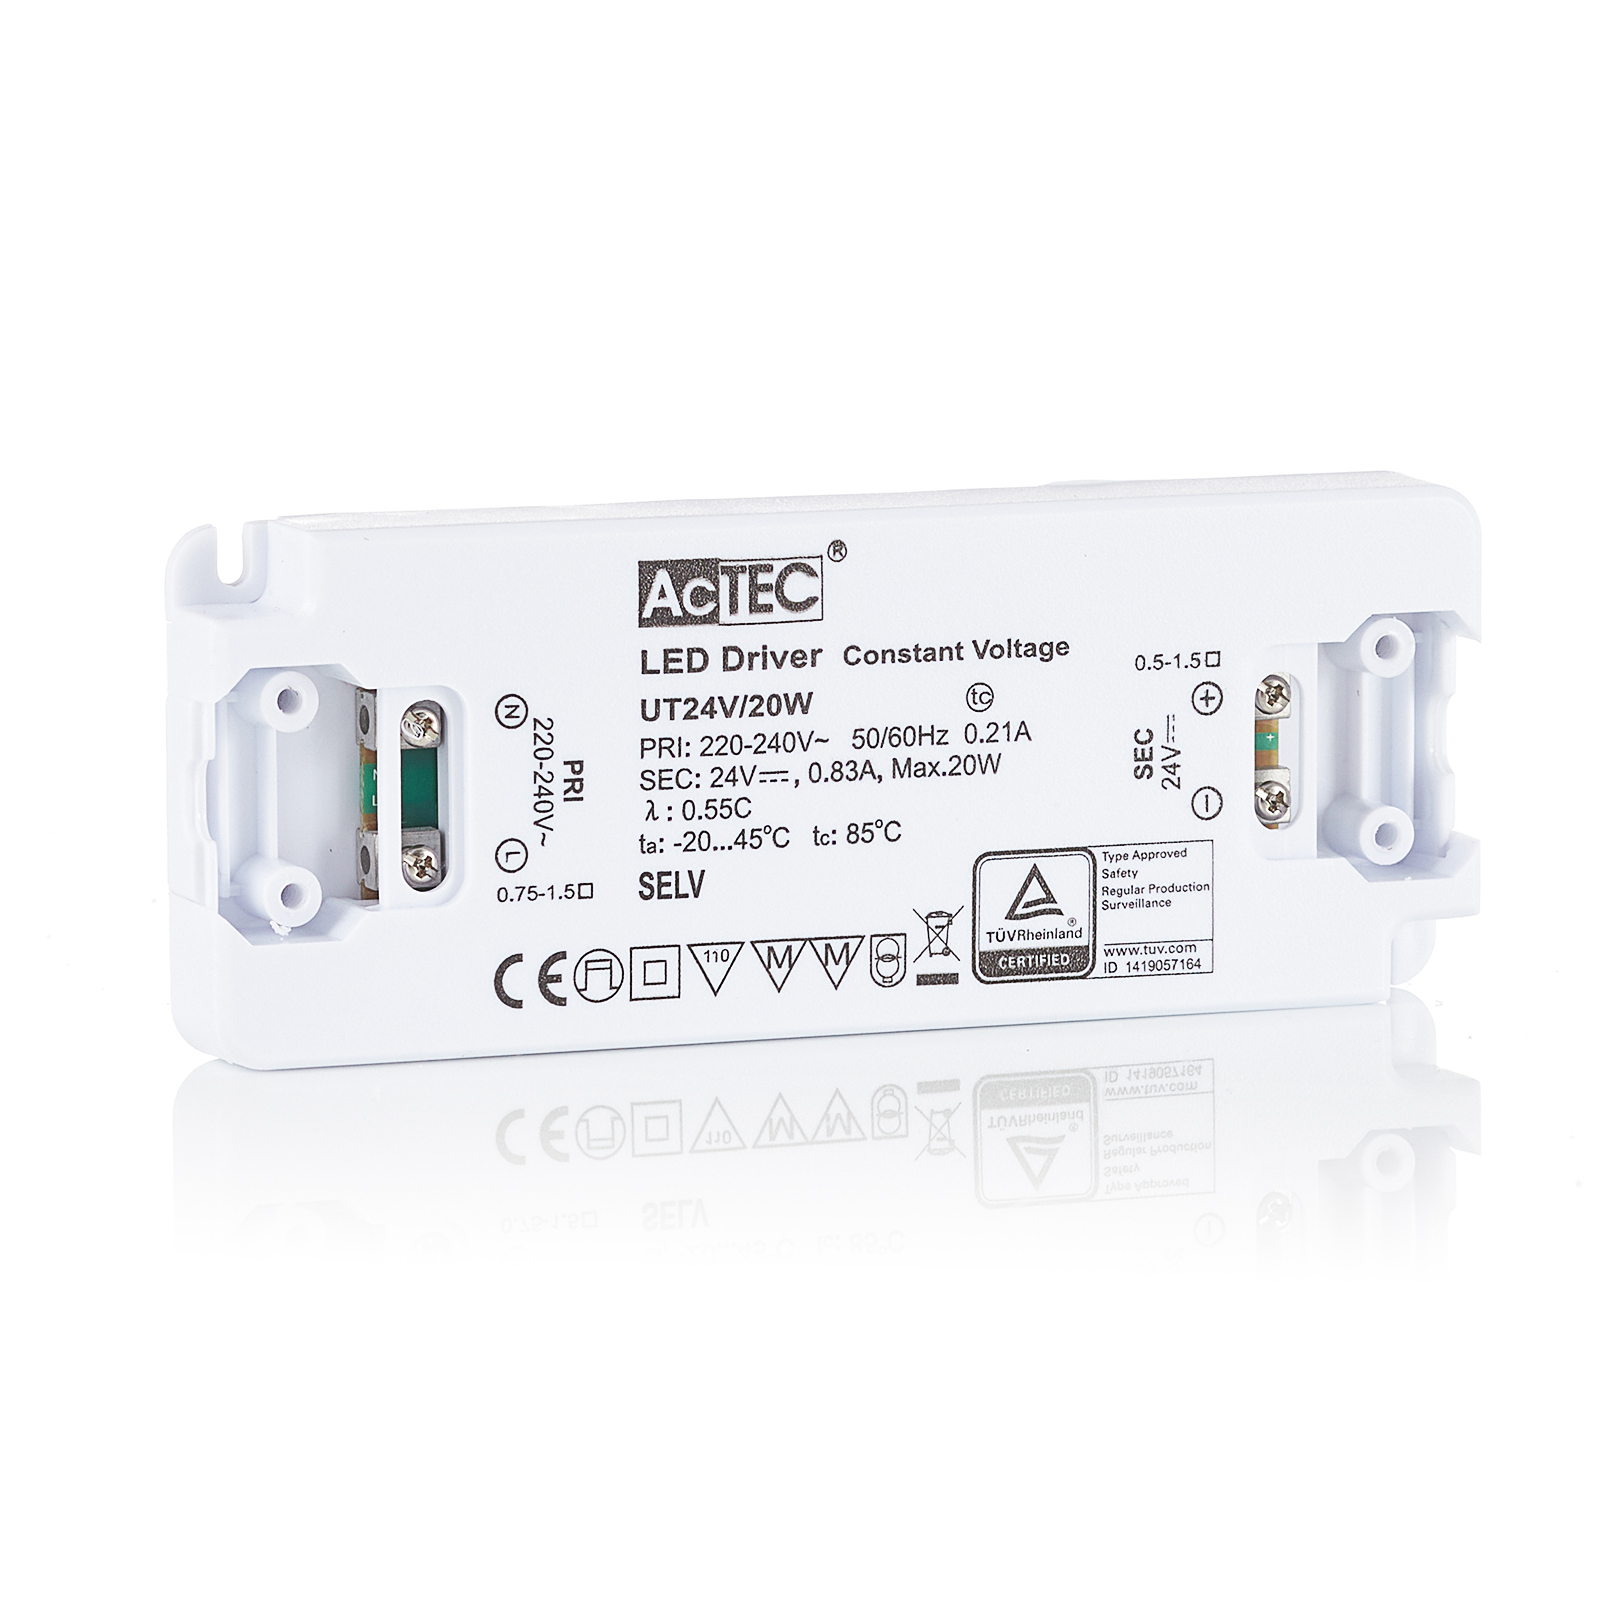 AcTEC Slim transformador LED CV 24V, 20W